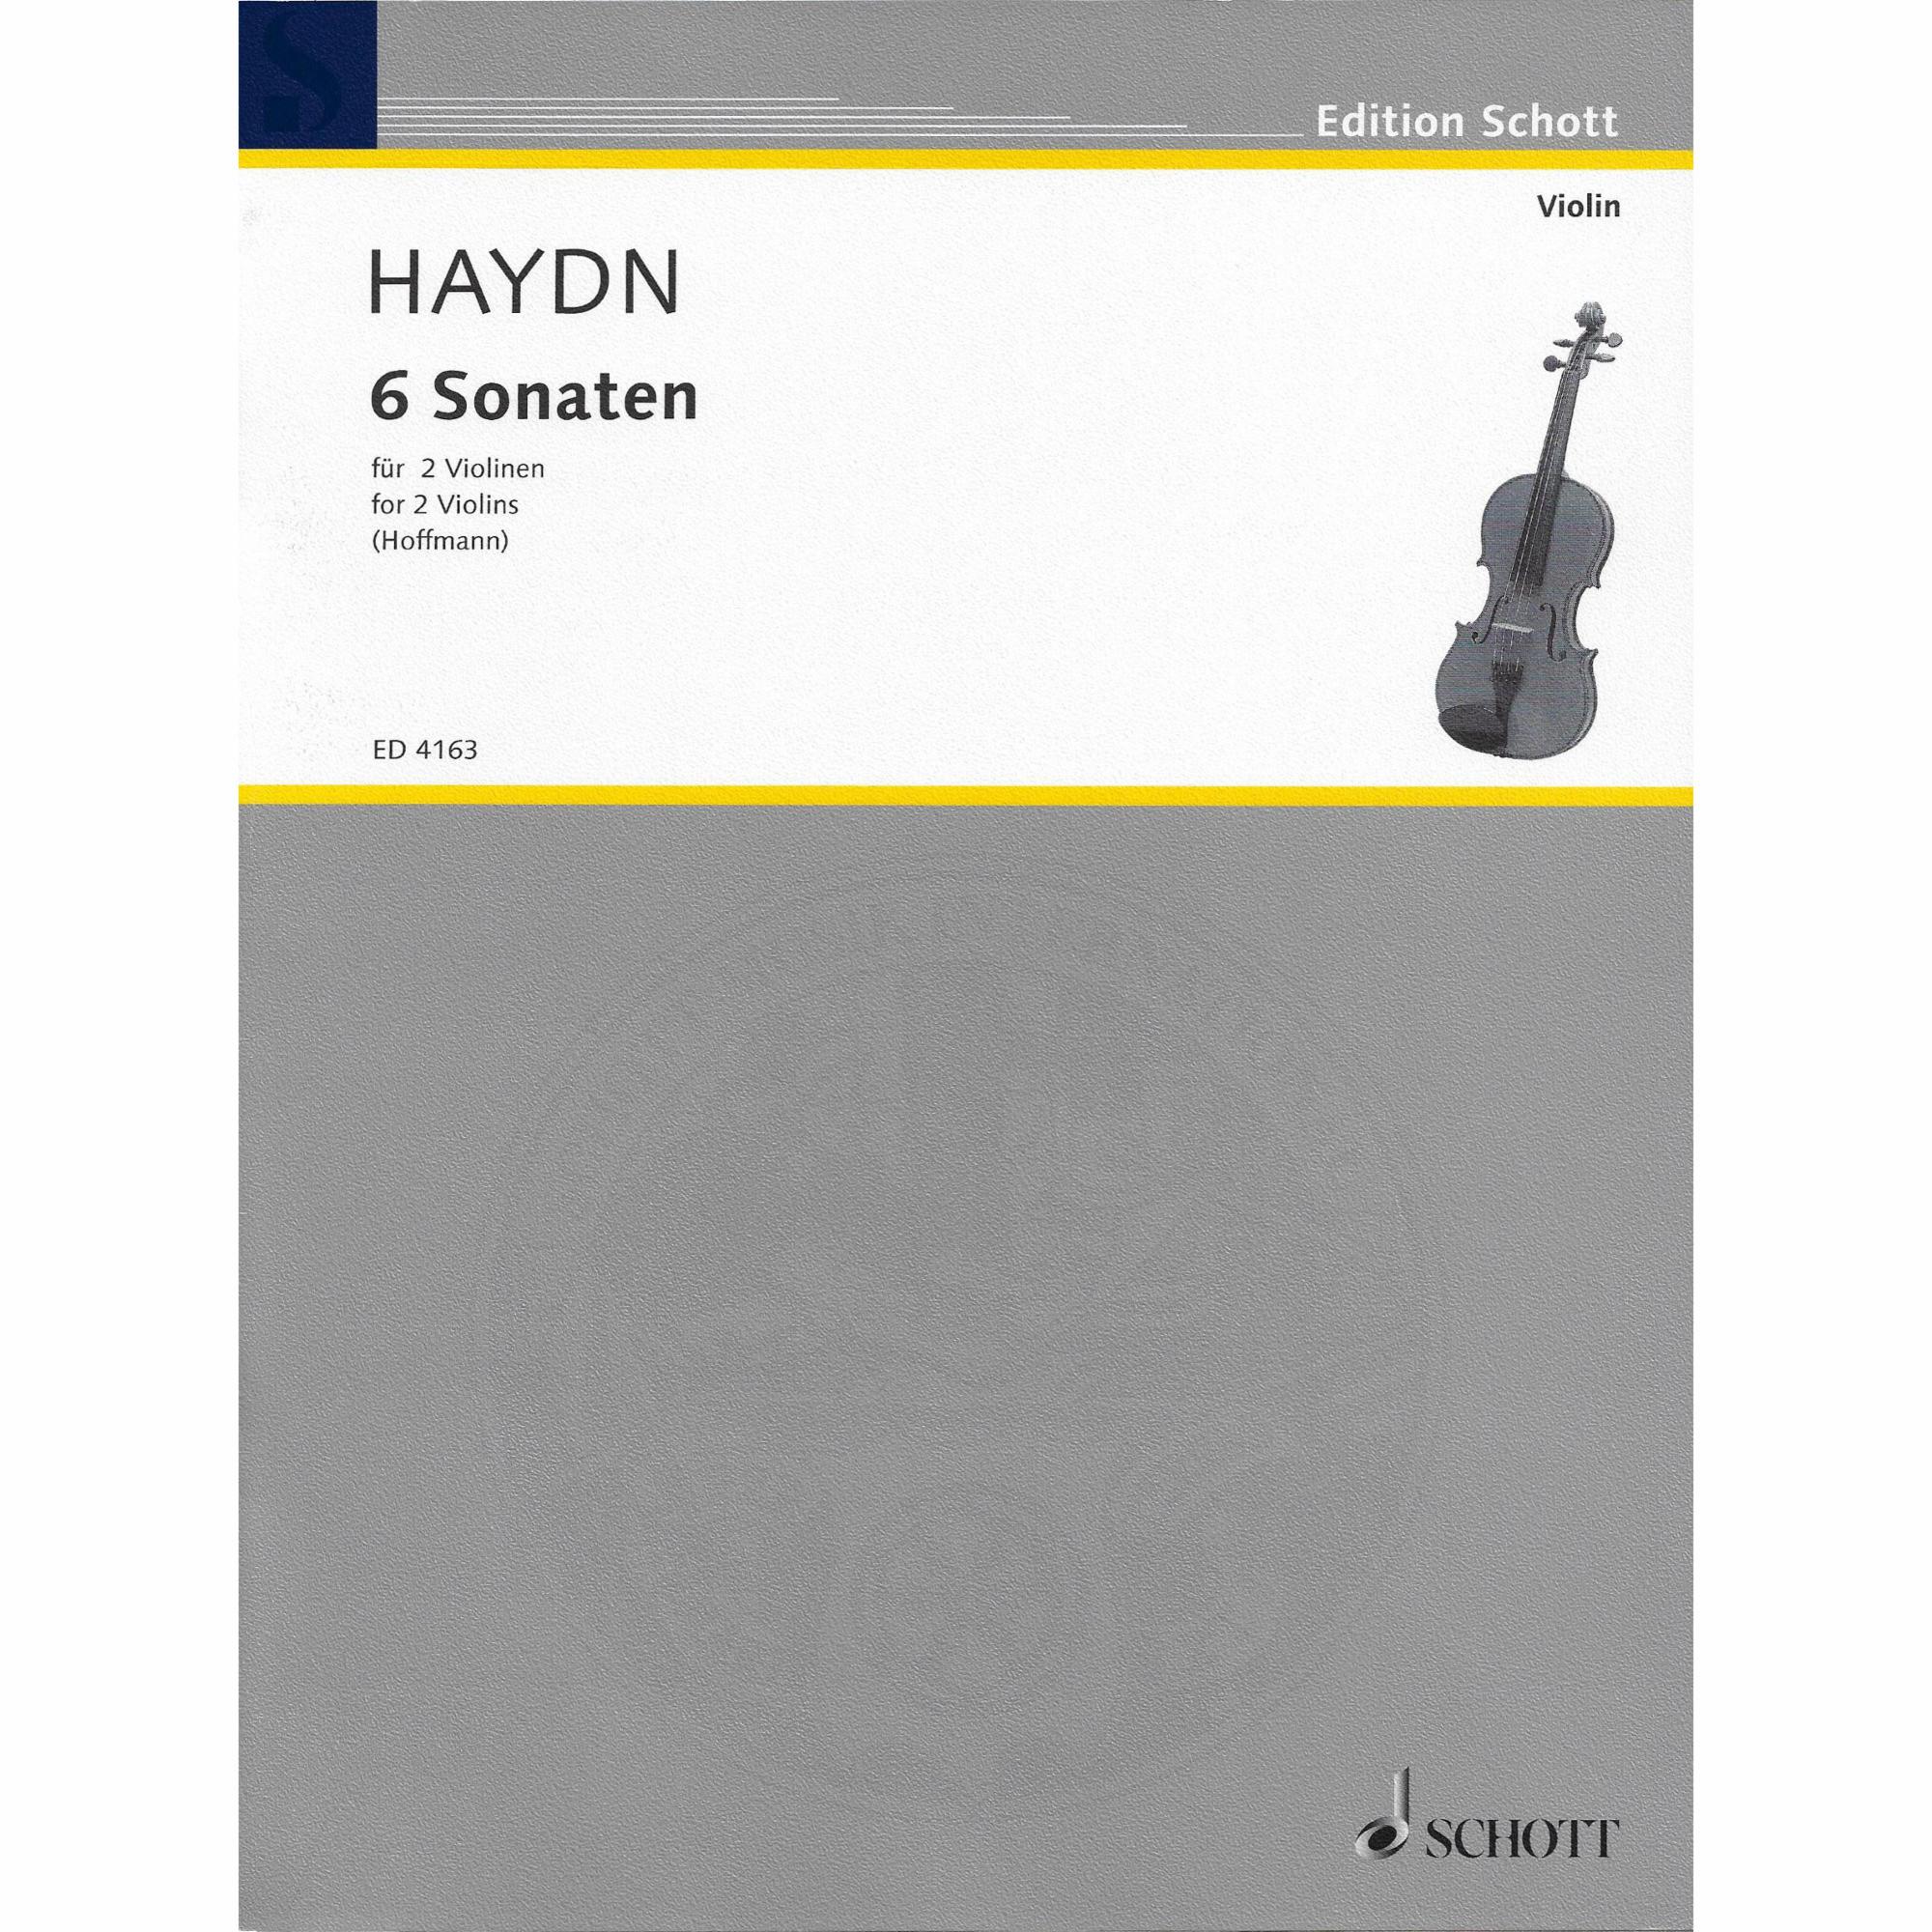 Haydn -- 6 Sonatas for Two Violins